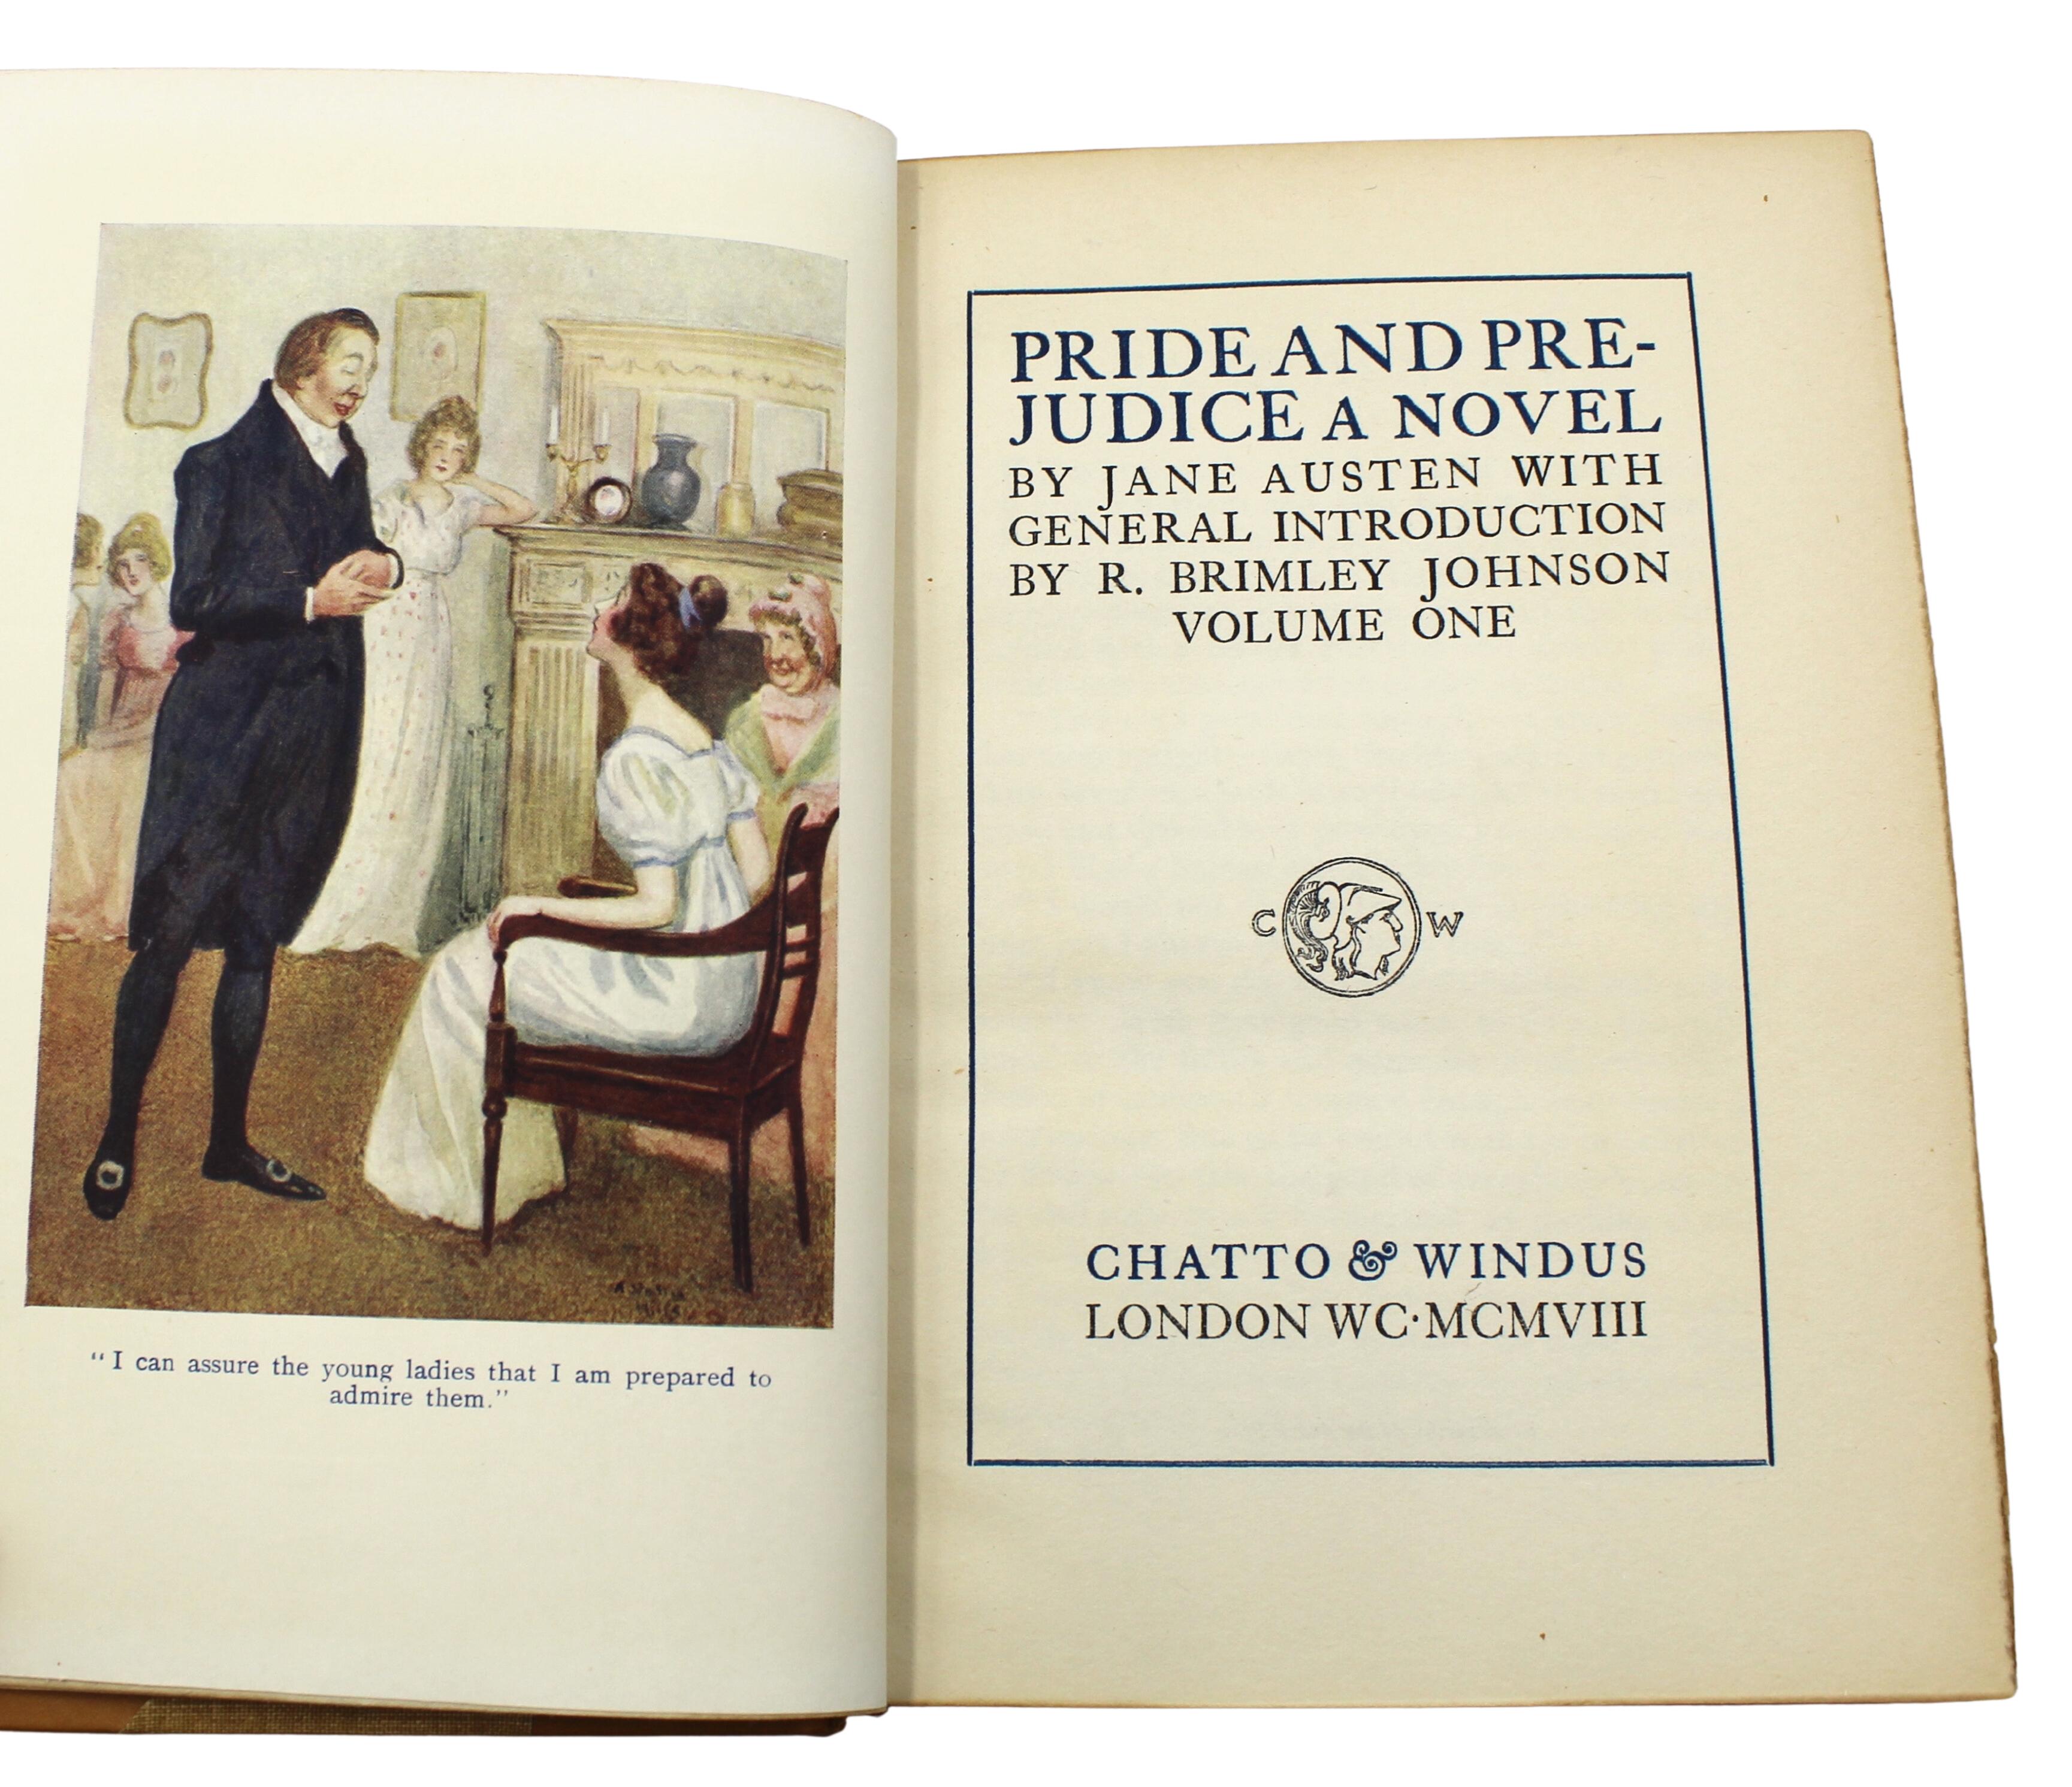 Gilt The Novels of Jane Austen by Jane Austen, 10 Volume Set, 1908-1909